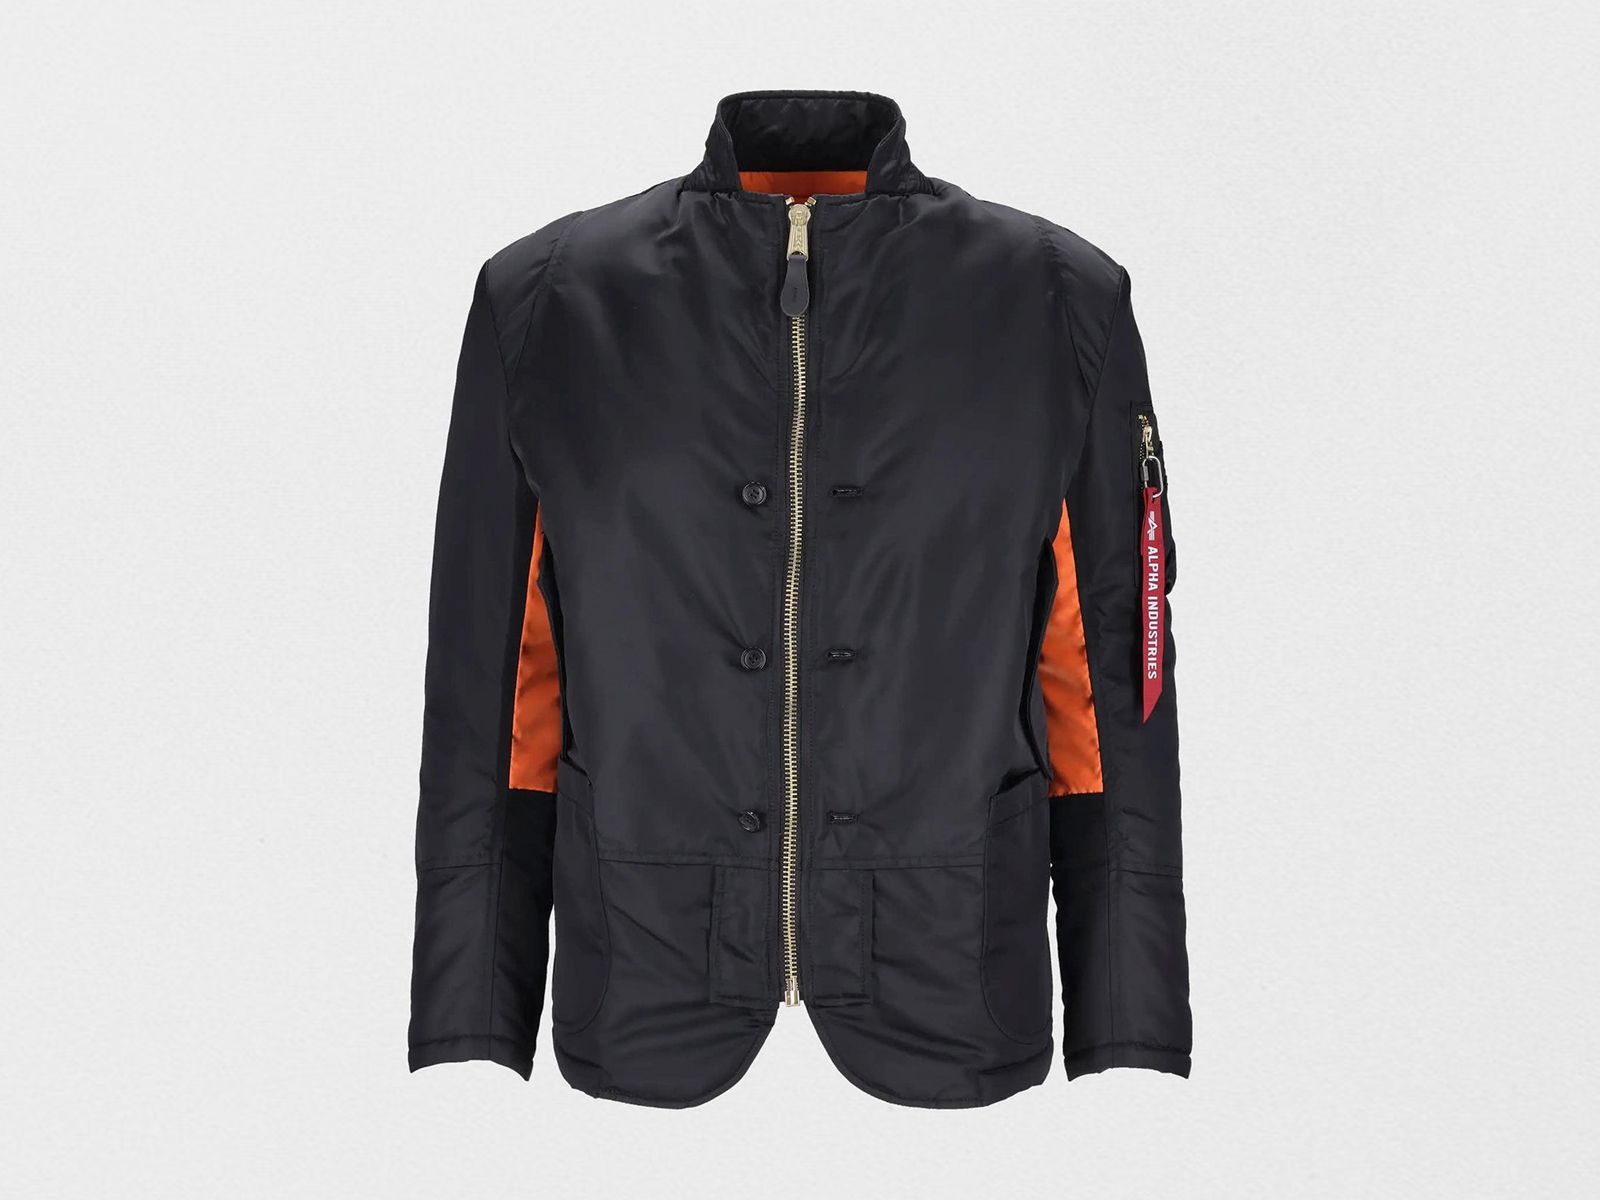 Junya Watanabe MAN x Alpha Industries MA-1: The perfect blazer/ bomber jacket hybrid